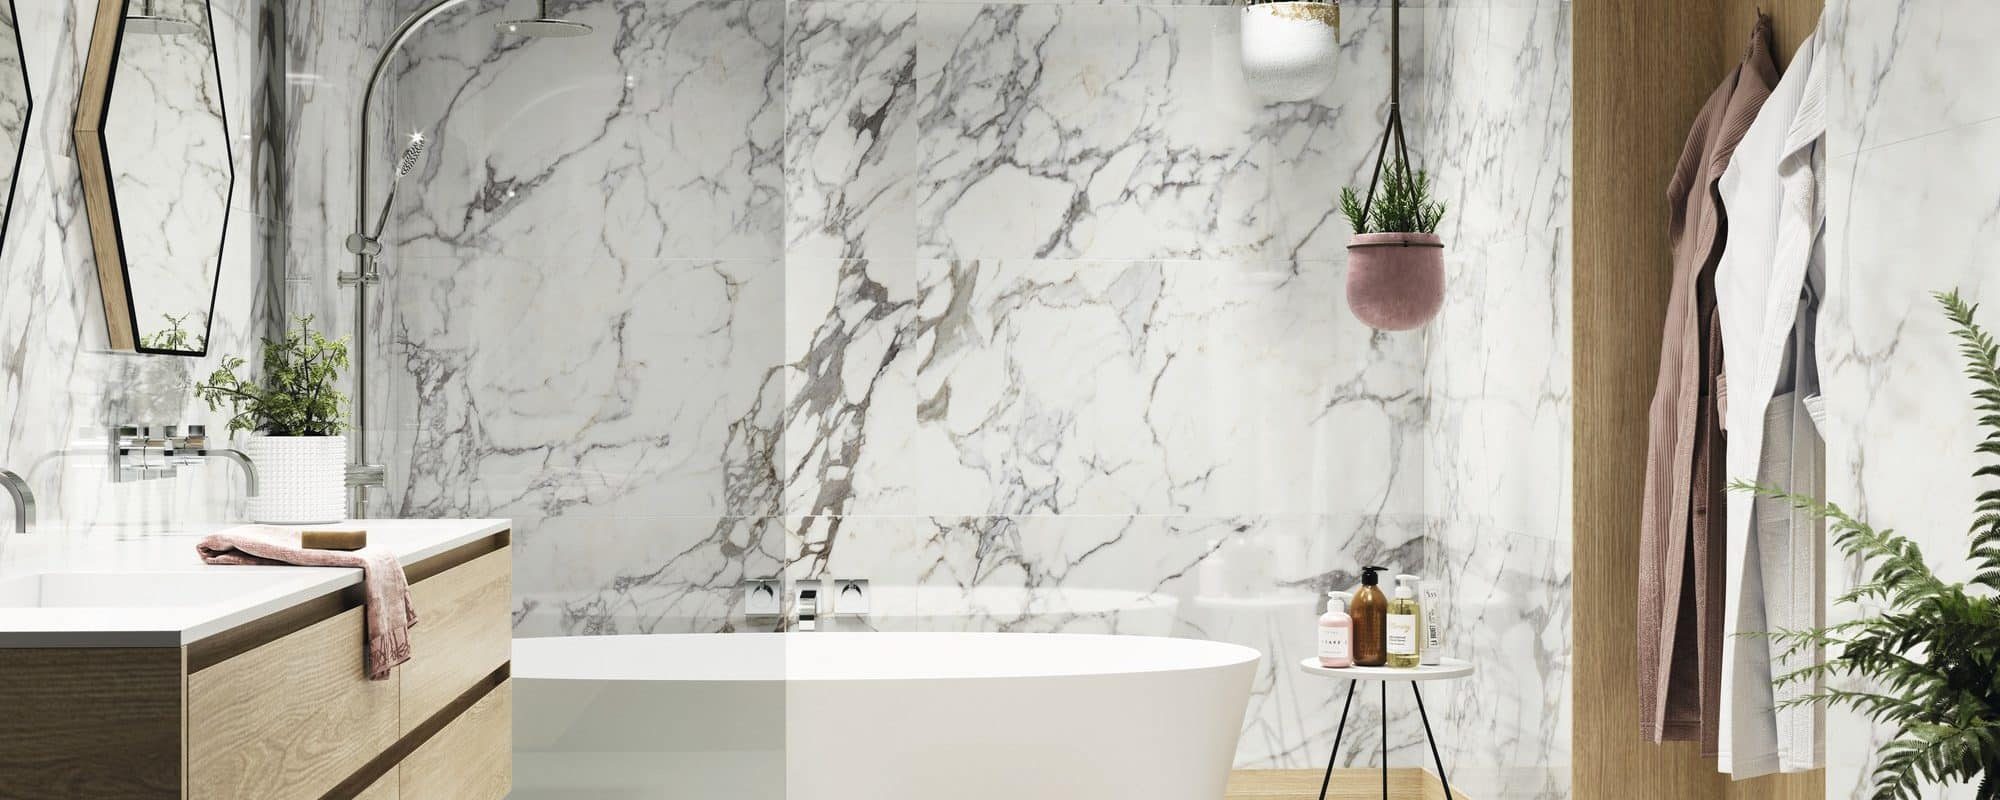 calacatta-silver-marble effect BATHROOM tiles london slider 2